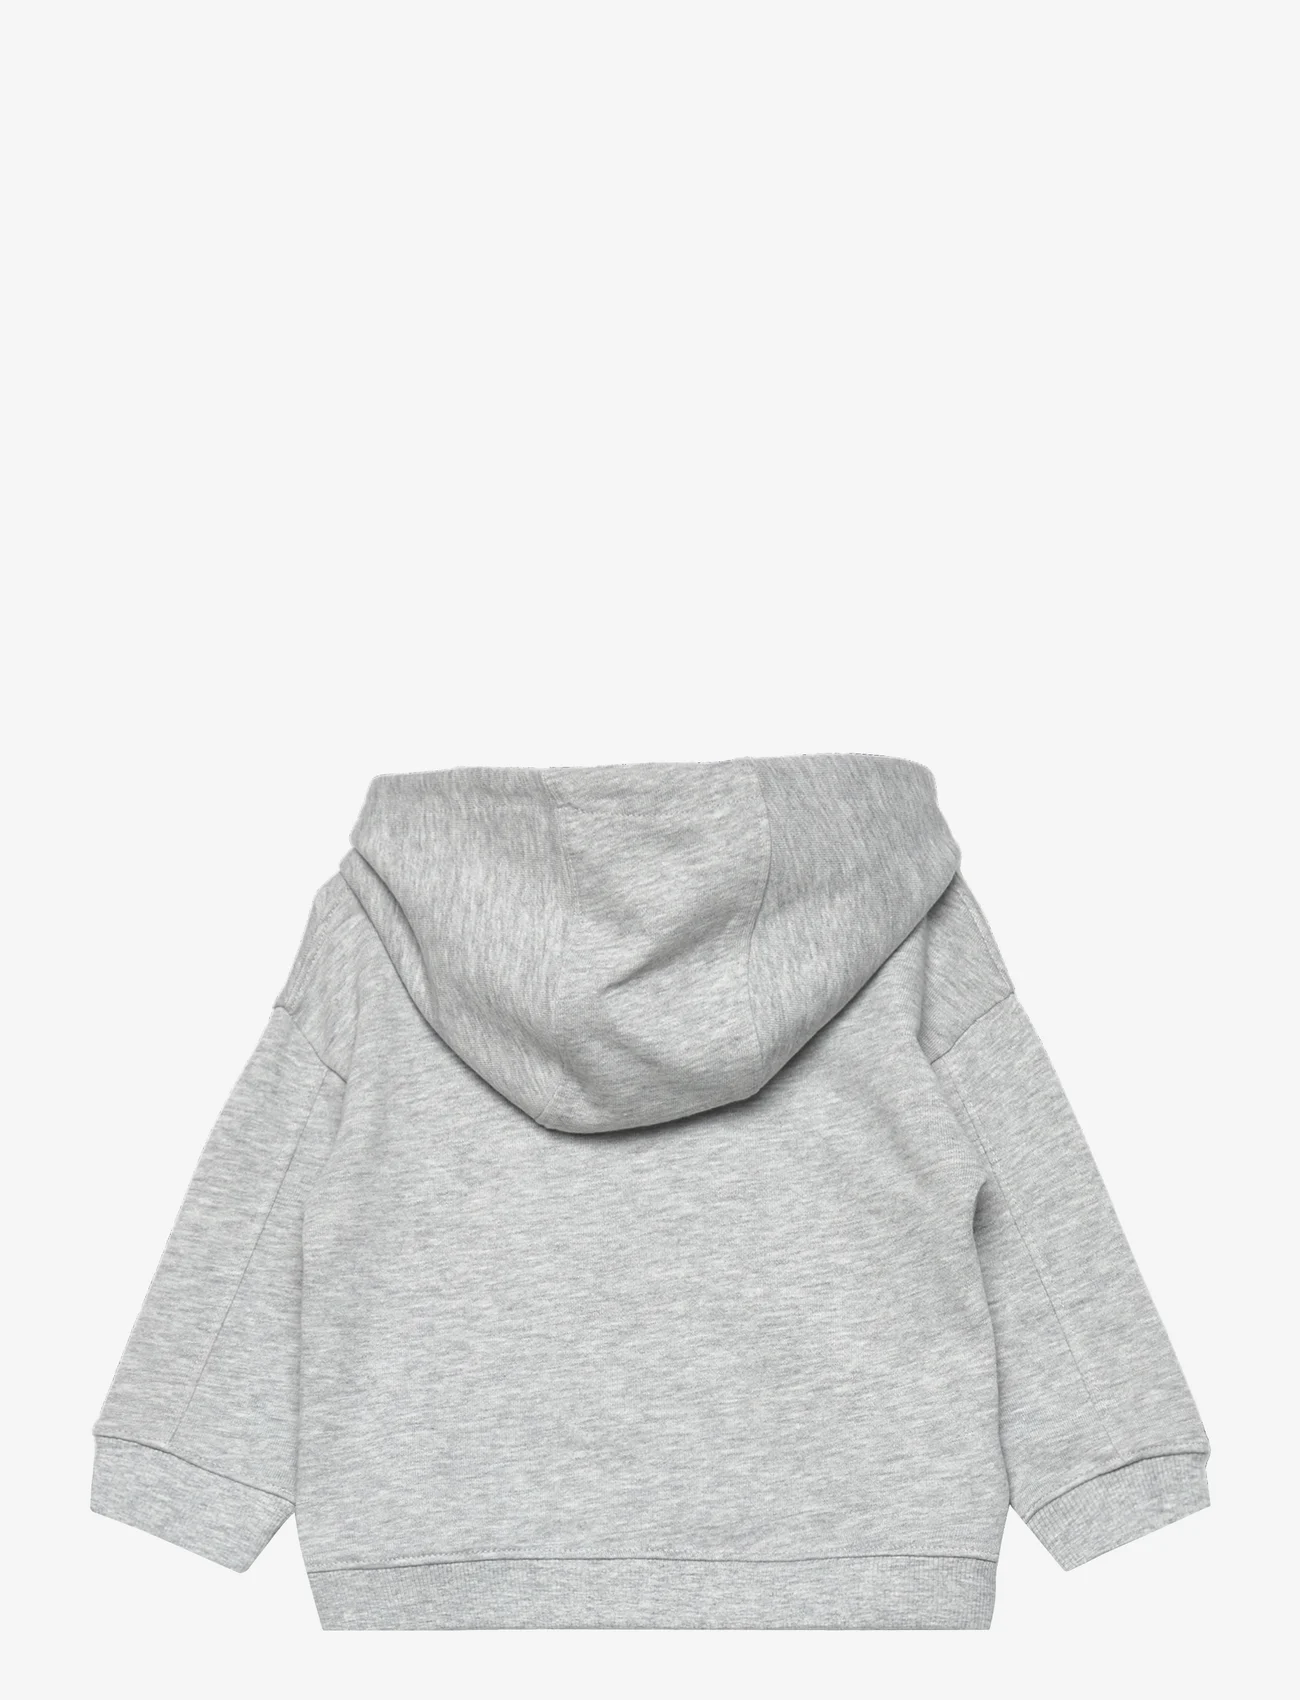 Mango - Printed picture sweatshirt - hættetrøjer - medium grey - 1